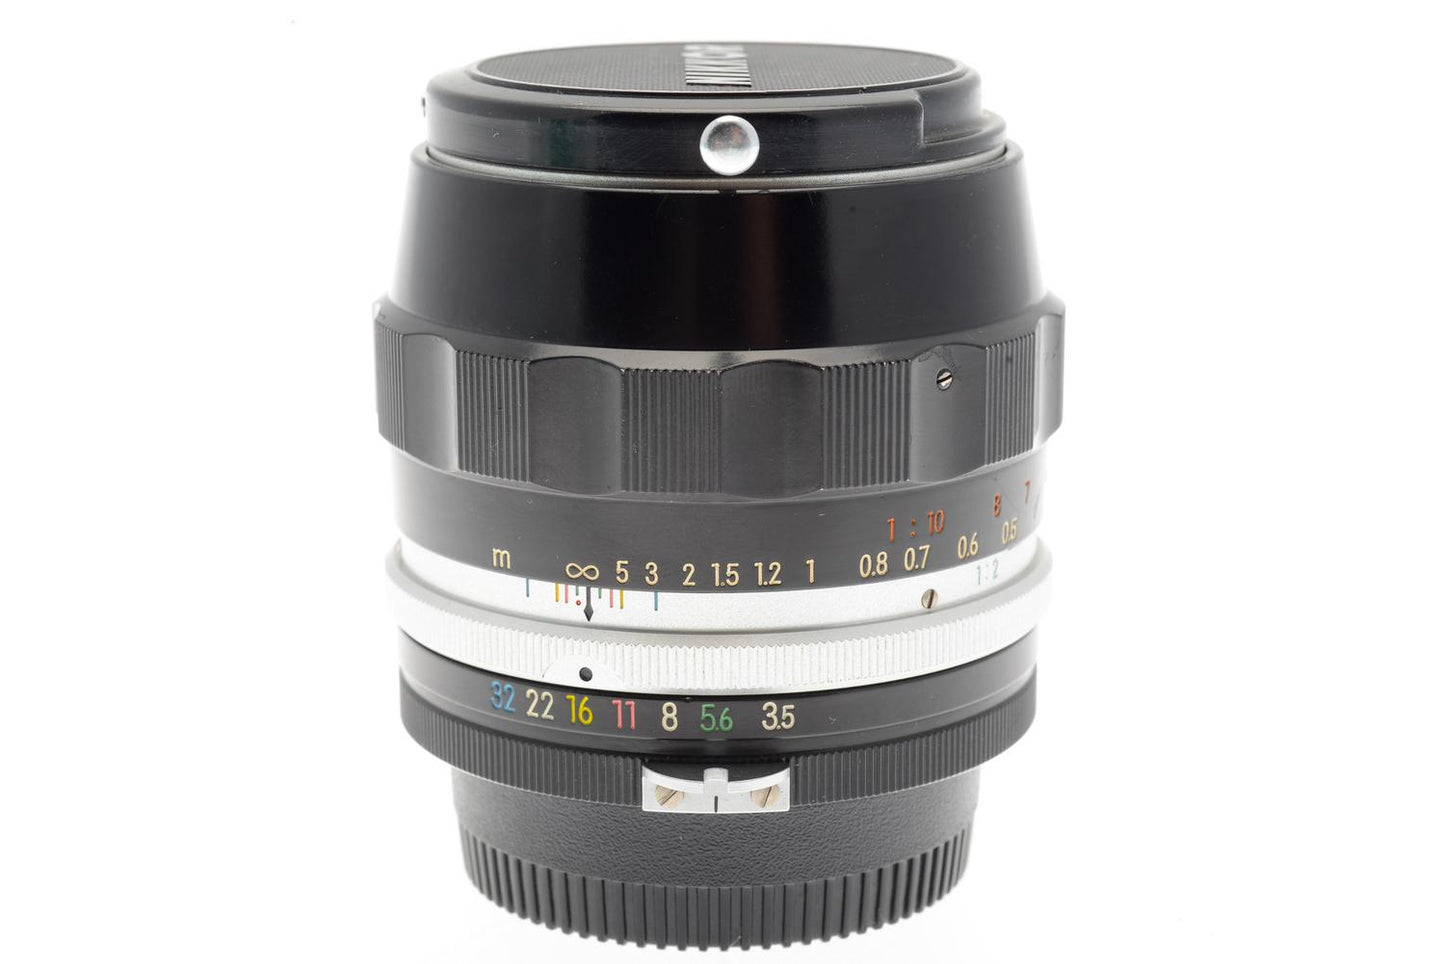 Nikon 55mm f3.5 Micro-Nikkor Auto Pre-AI - Lens